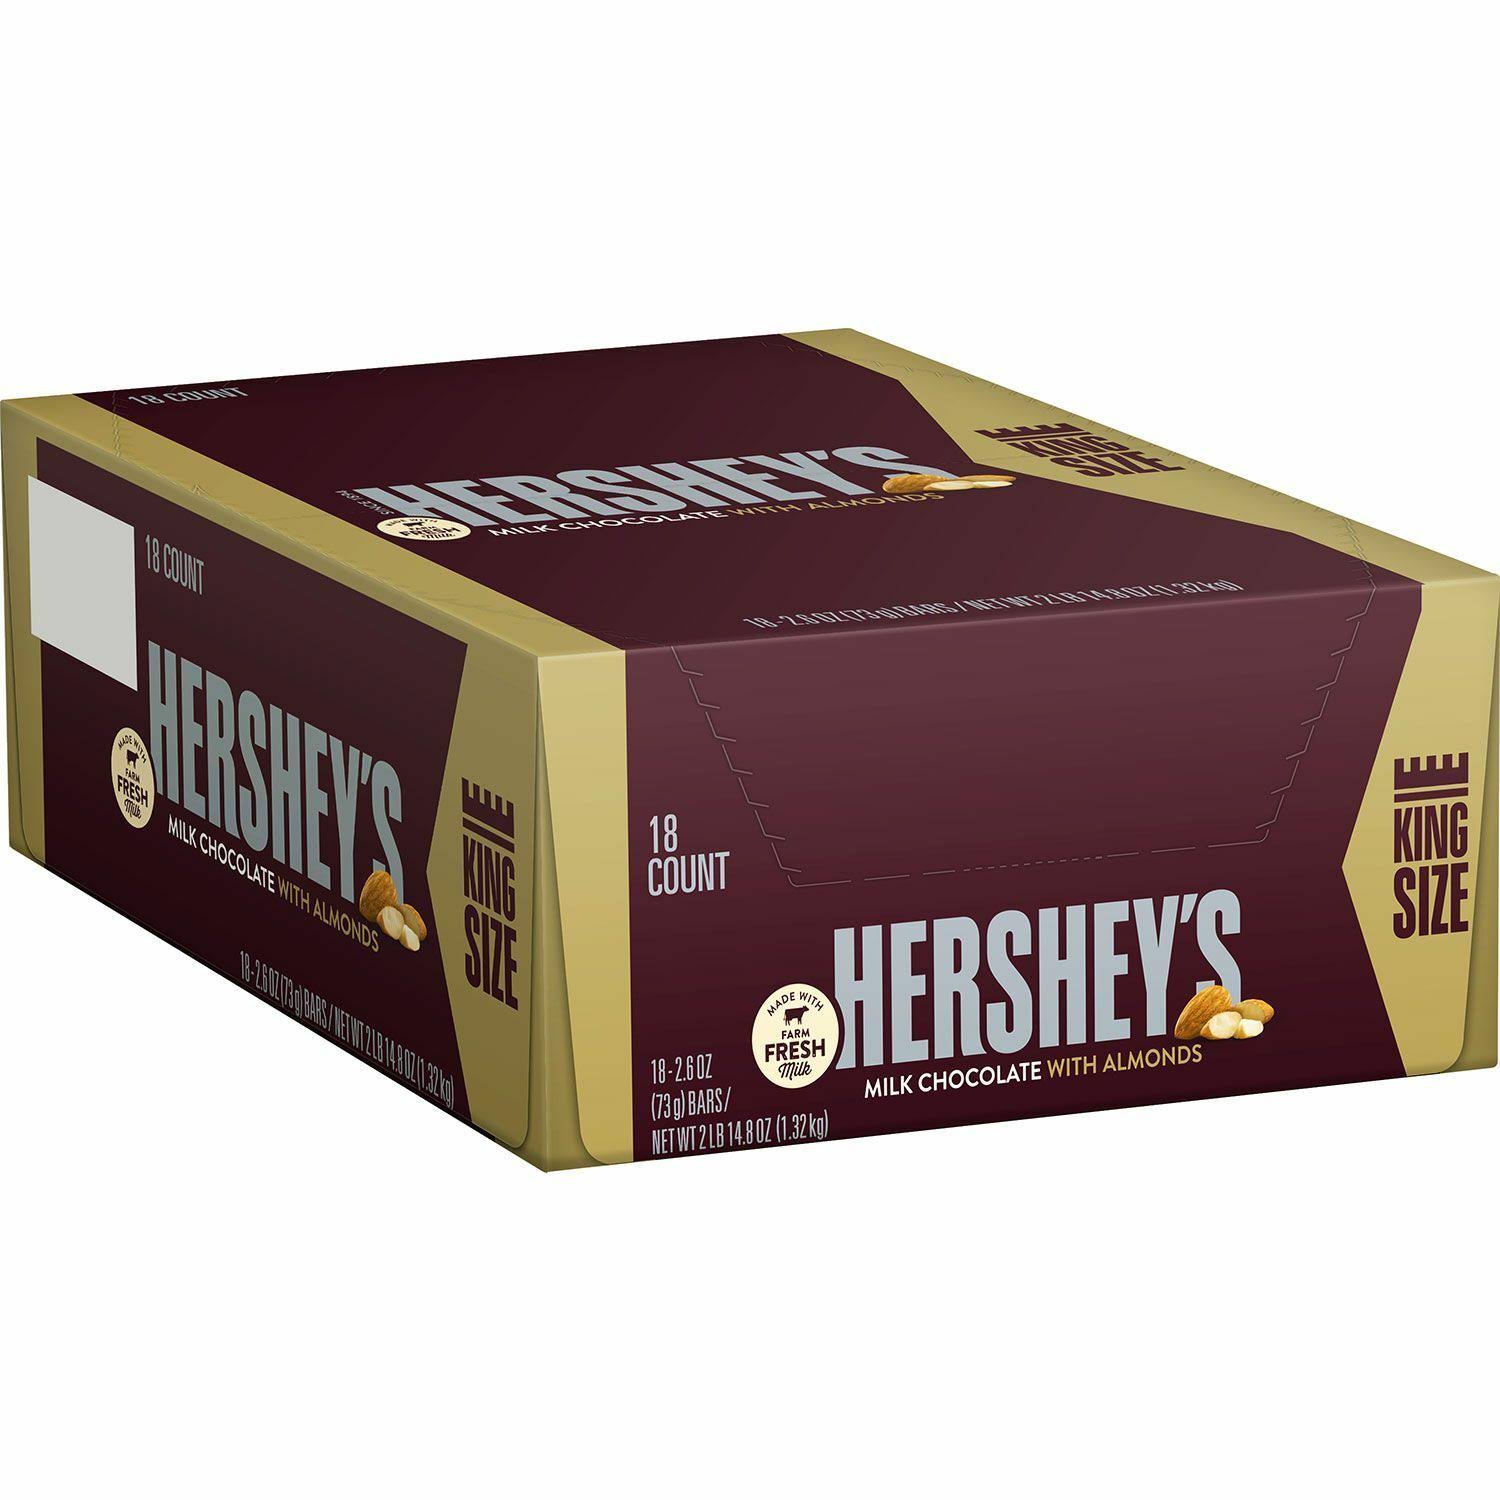 Hershey's Milk Chocolate Bars With Almonds - King Size, 2.6oz